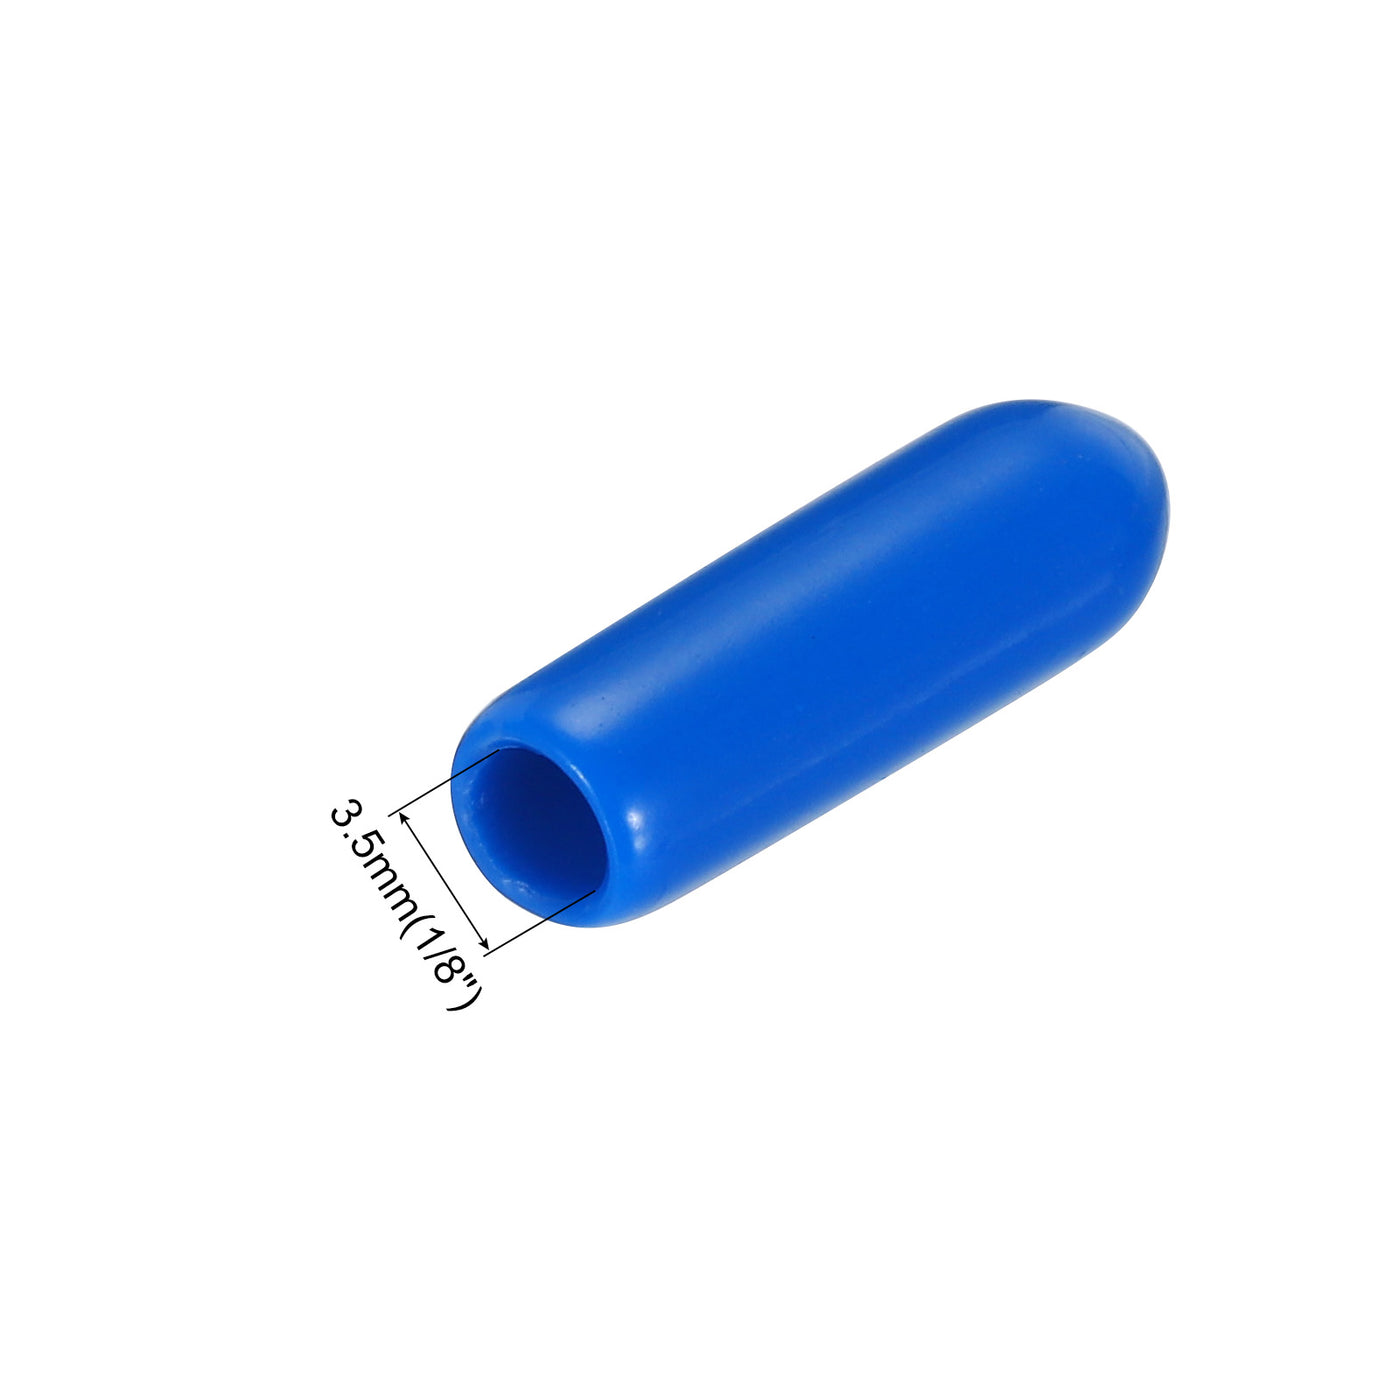 uxcell Uxcell 50pcs Rubber End Caps 3.5mm(1/8") ID Vinyl PVC Round Tube Bolt Cap Cover Screw Thread Protectors Blue